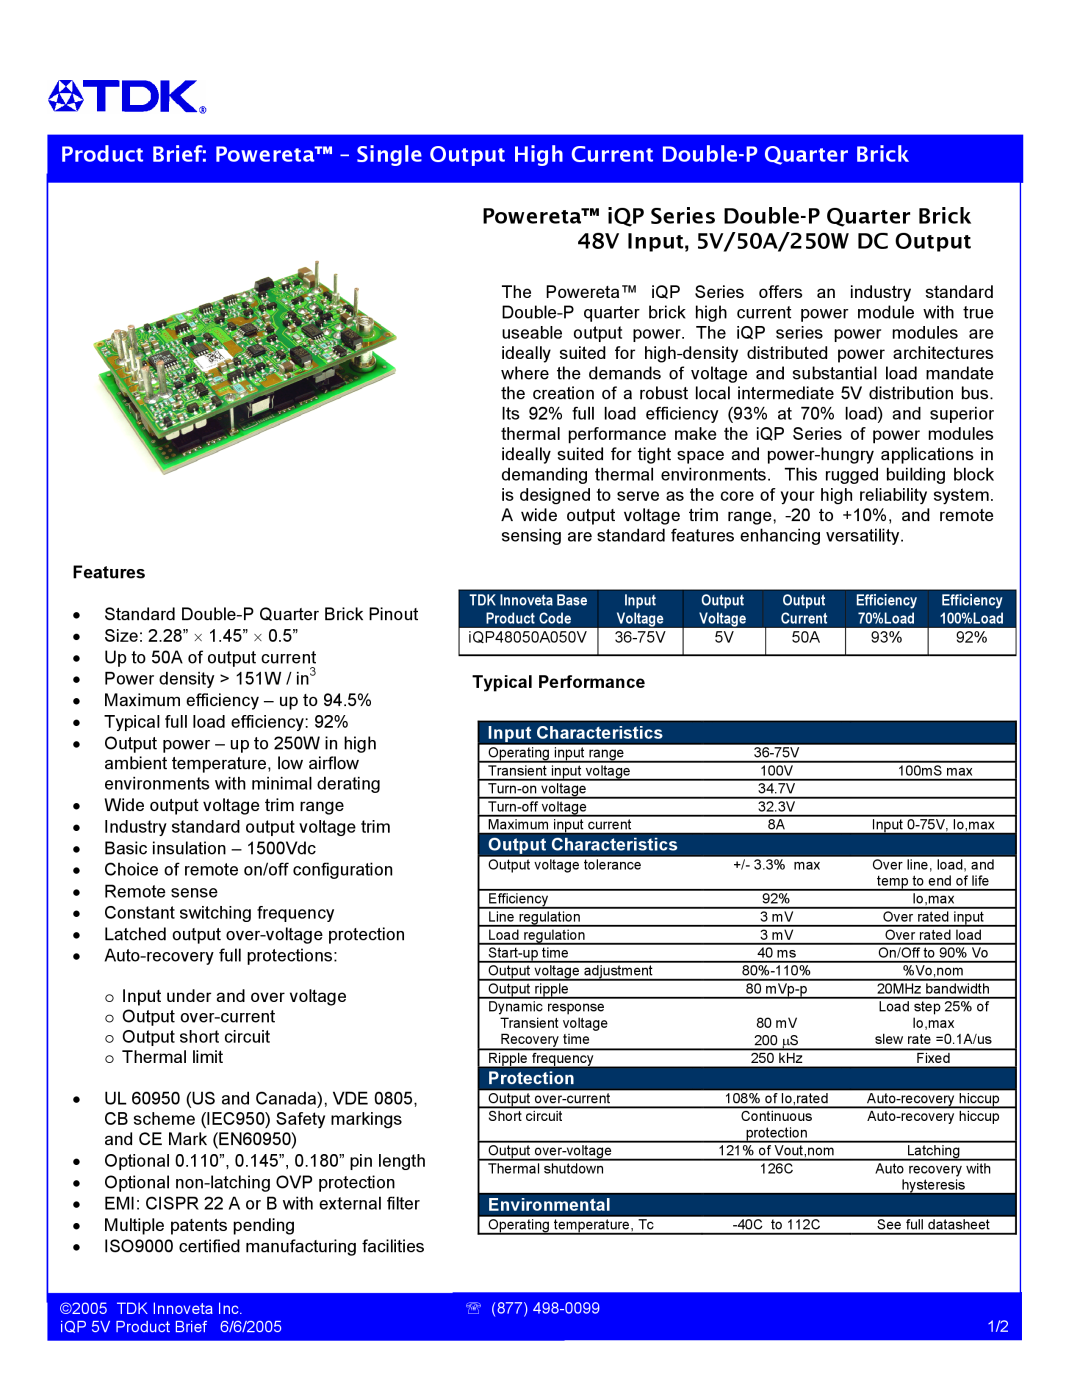 TDK manual Powereta iQP Series Double-P Quarter Brick, 48V Input, 5V/50A/250W DC Output, Input Characteristics 